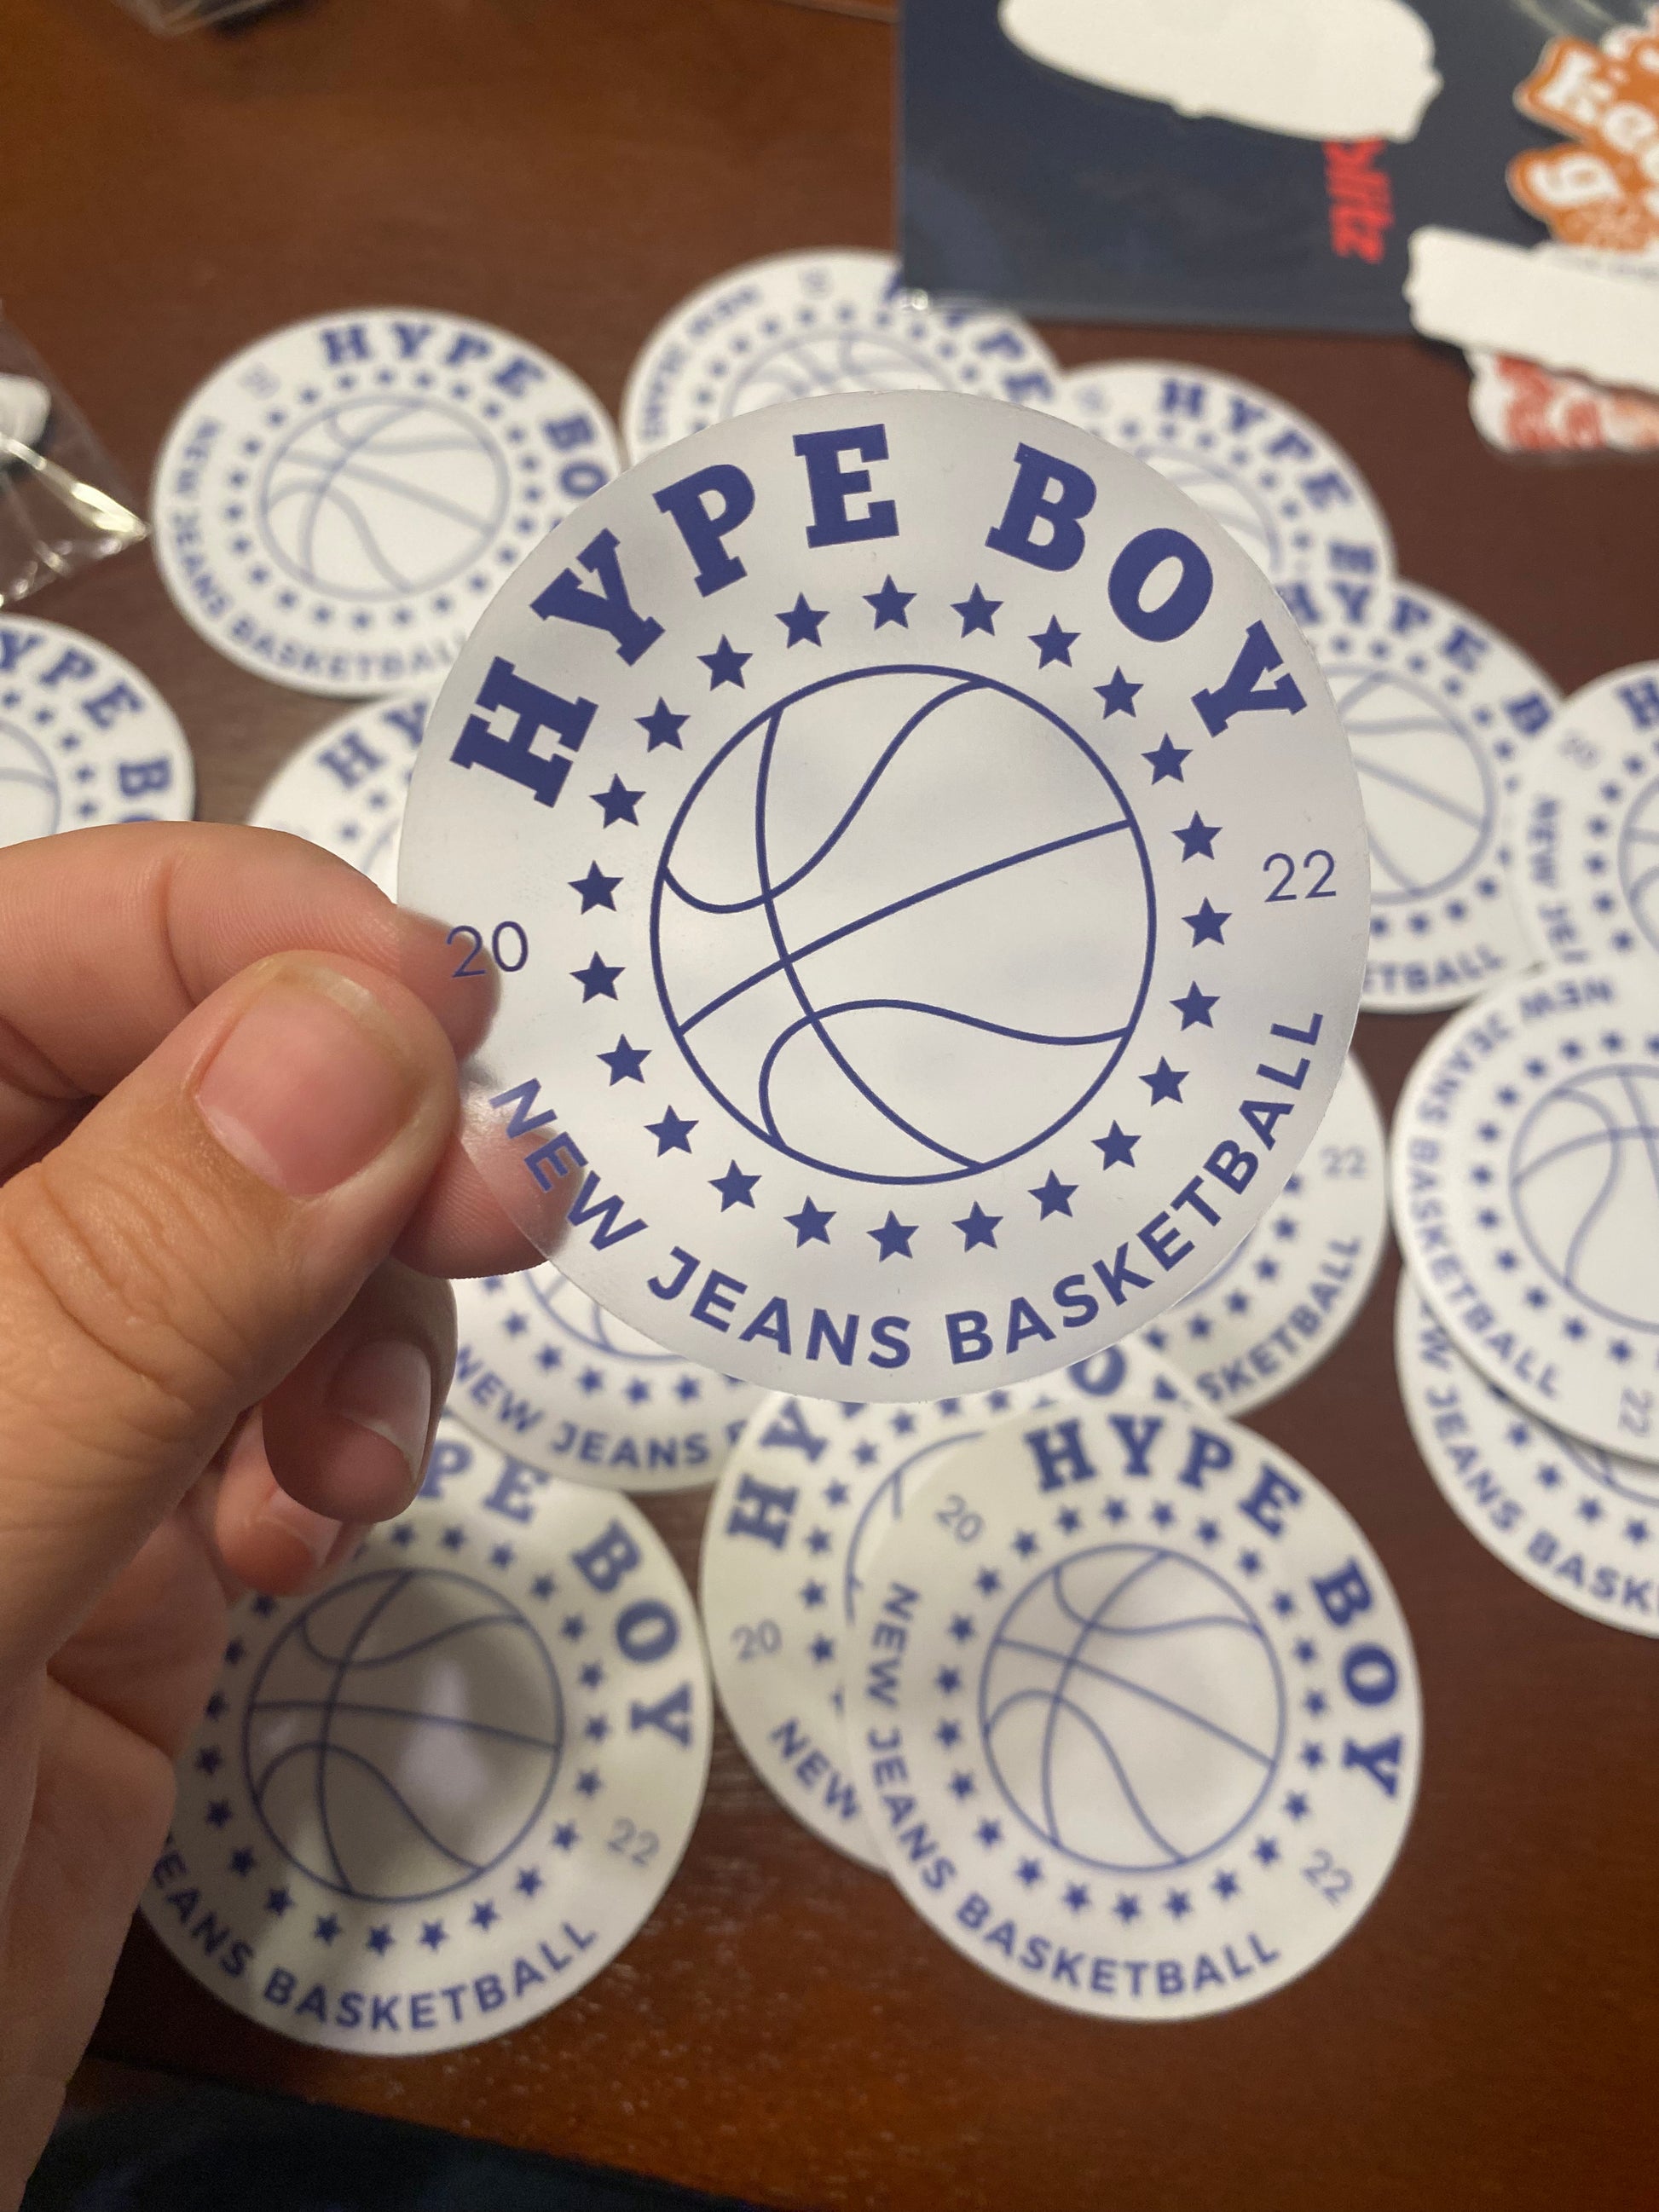 Hype Boy Basketball Sticker